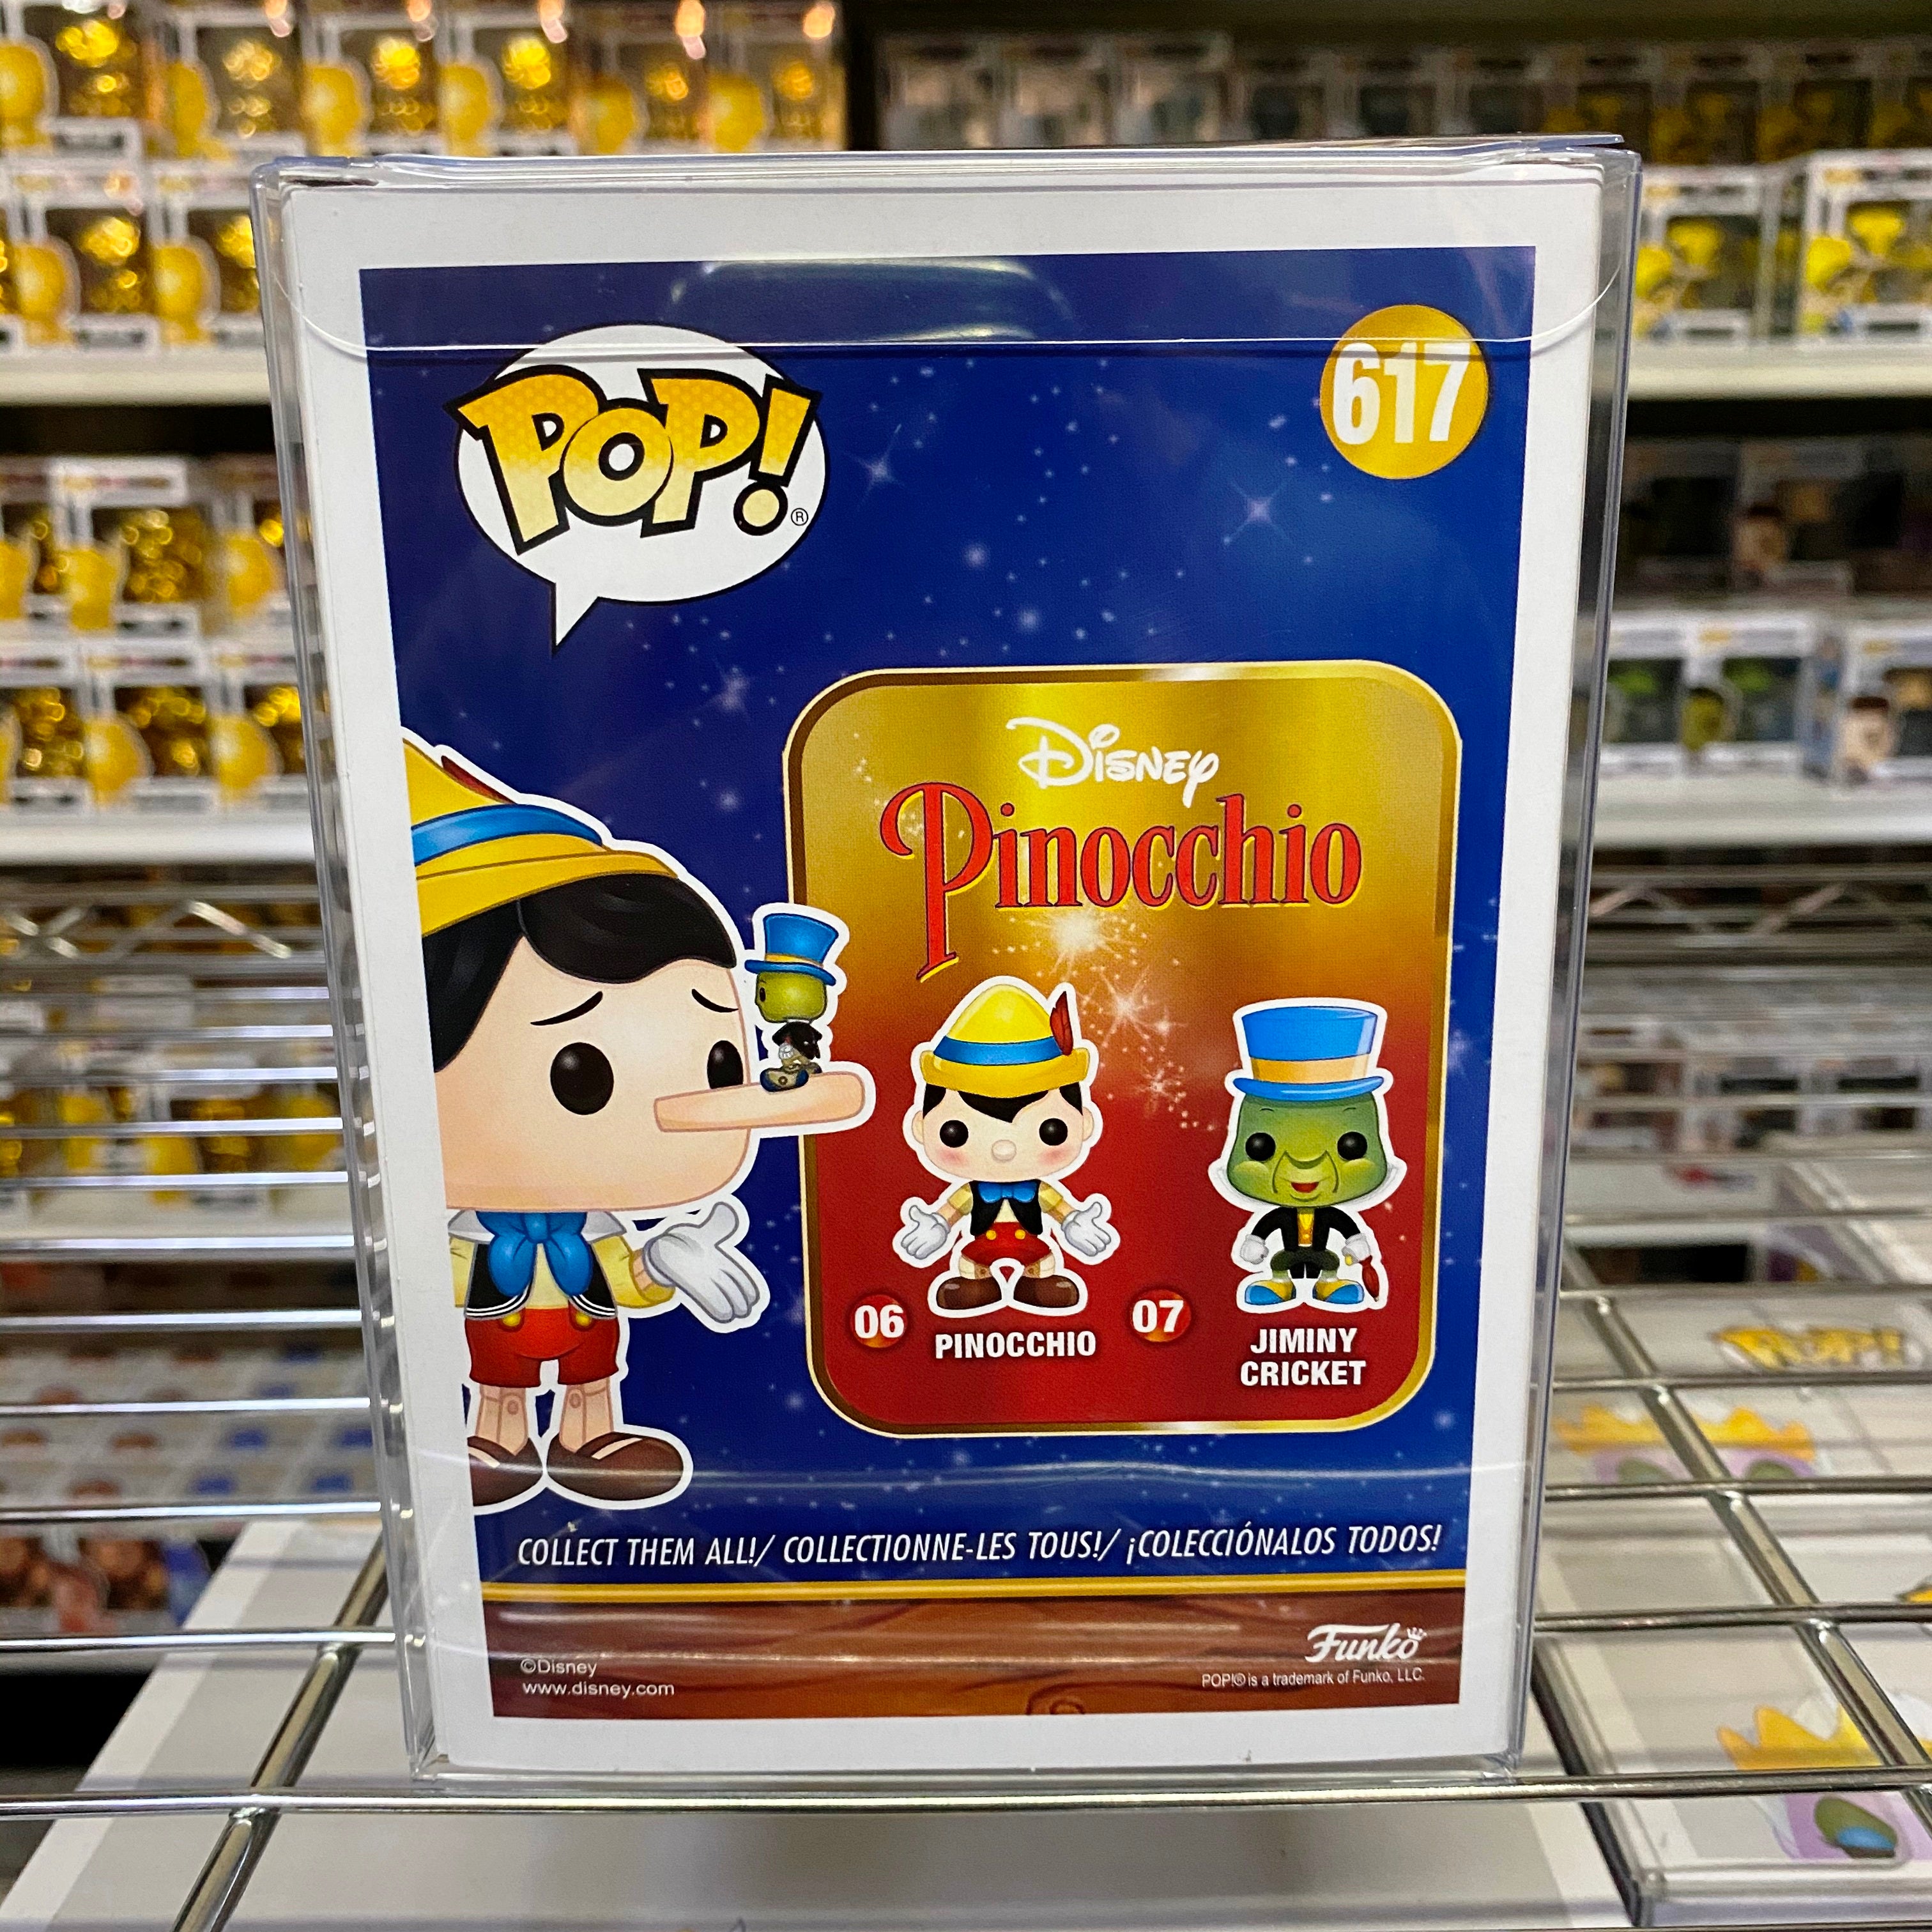 Funko Pop Disney : Pinocchio #617 Vinyl Figure Special Edition – POPNATION